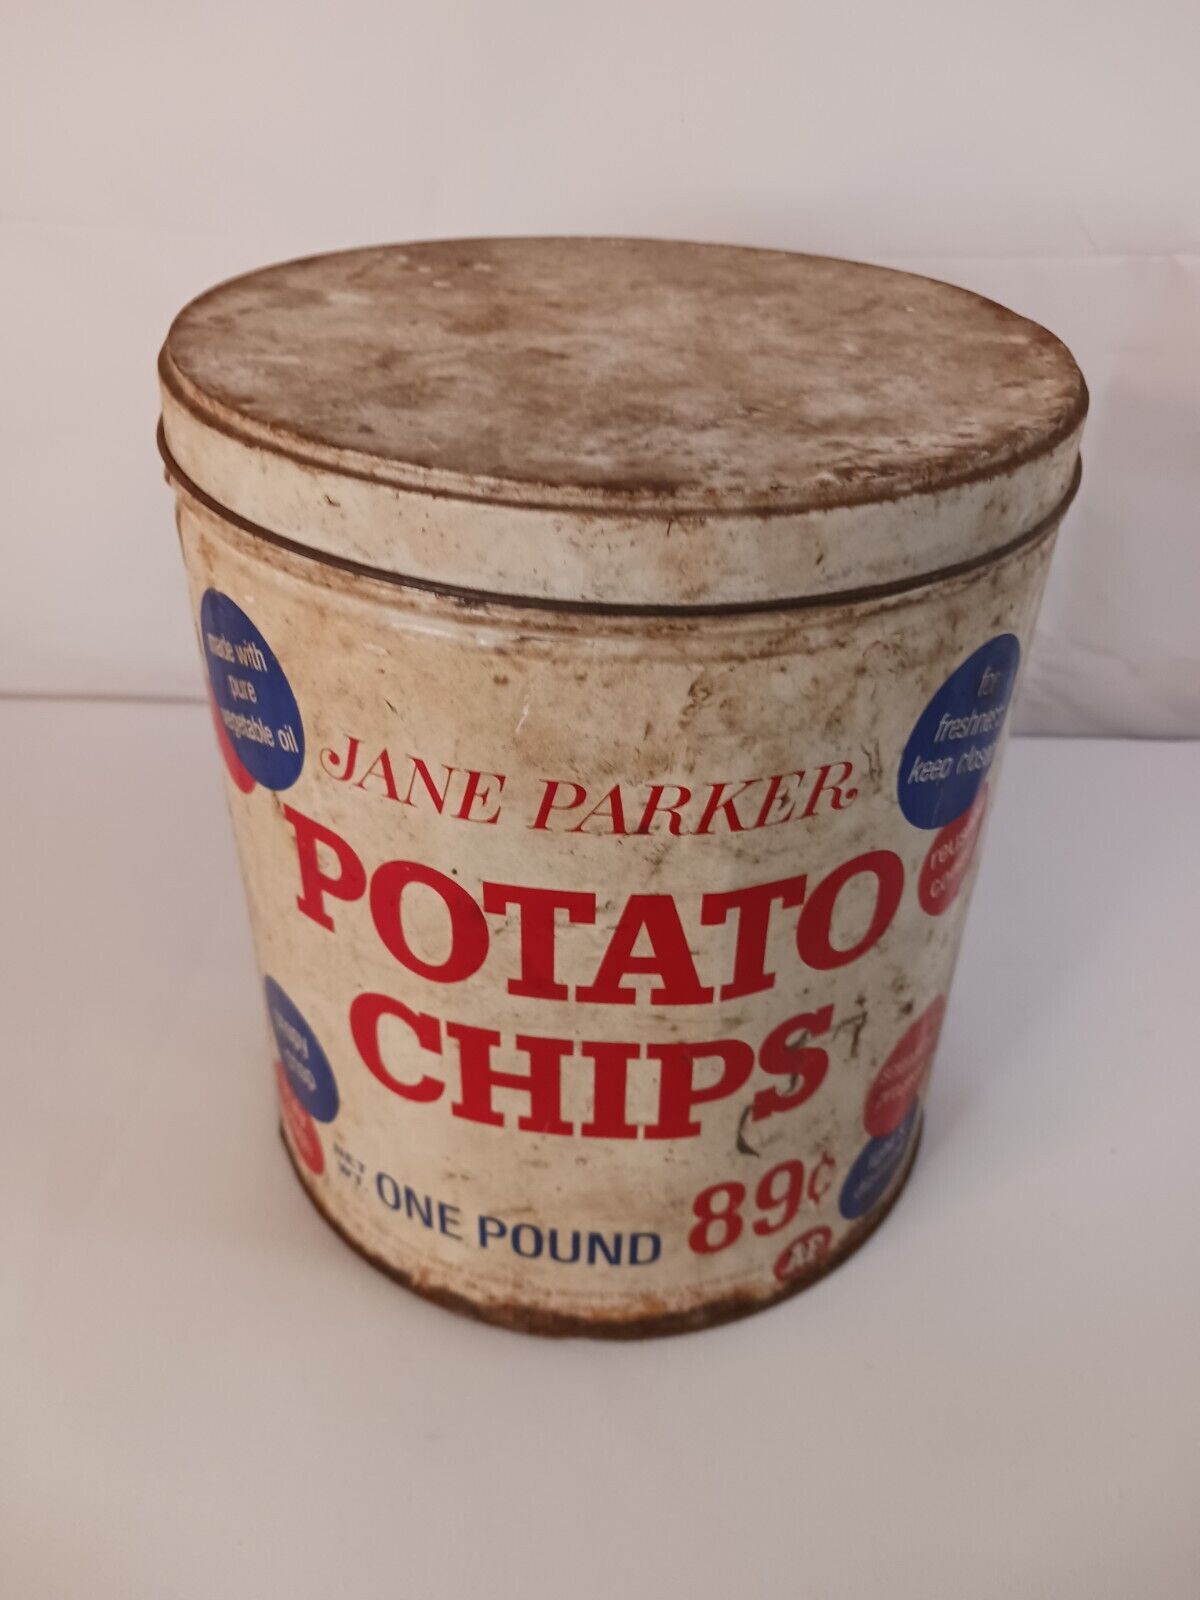 Vintage A&P Jane Parker Potato Chip Advertising Tin 89 cent - New York, NY